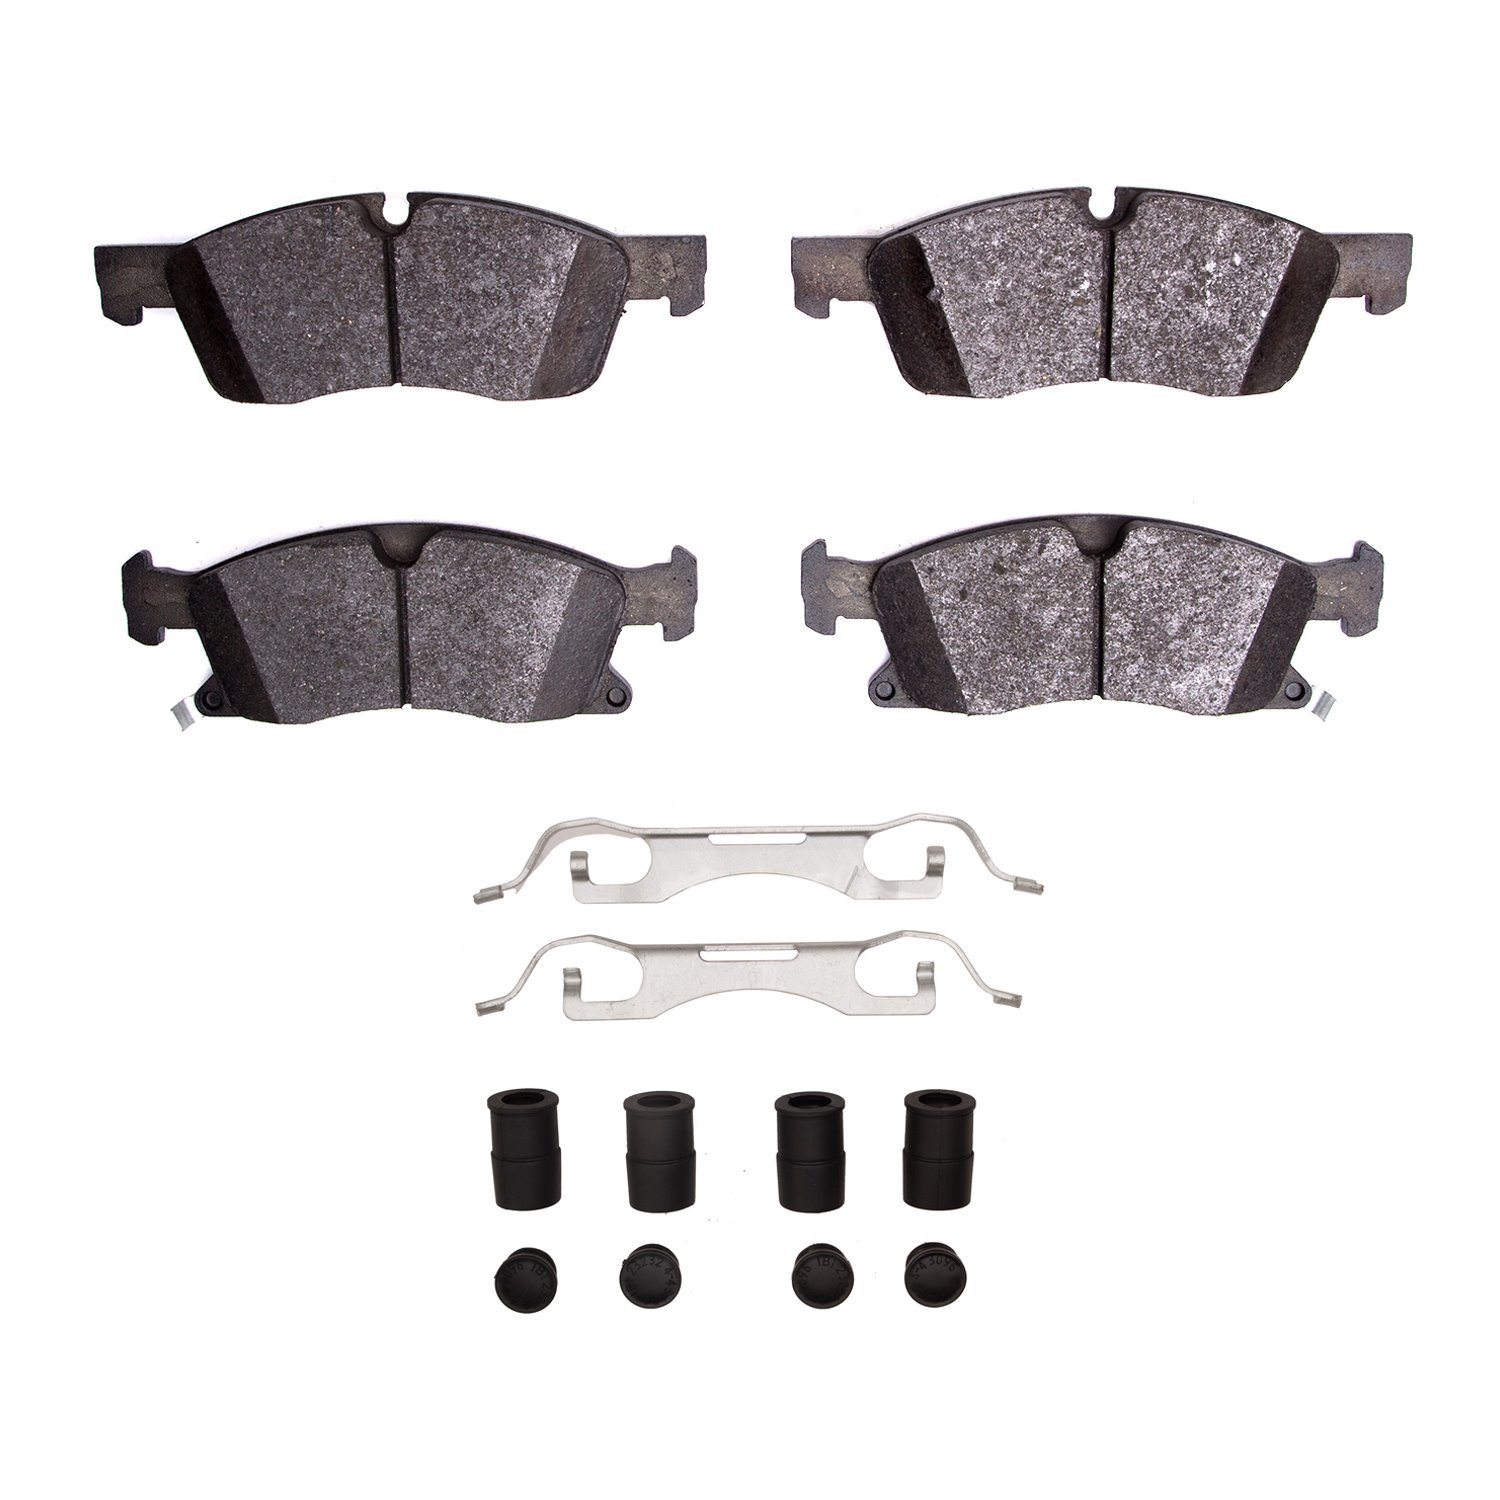 1400-1904-01 Ultimate-Duty Brake Pads & Hardware Kit, Fits Select Mopar, Position: Front